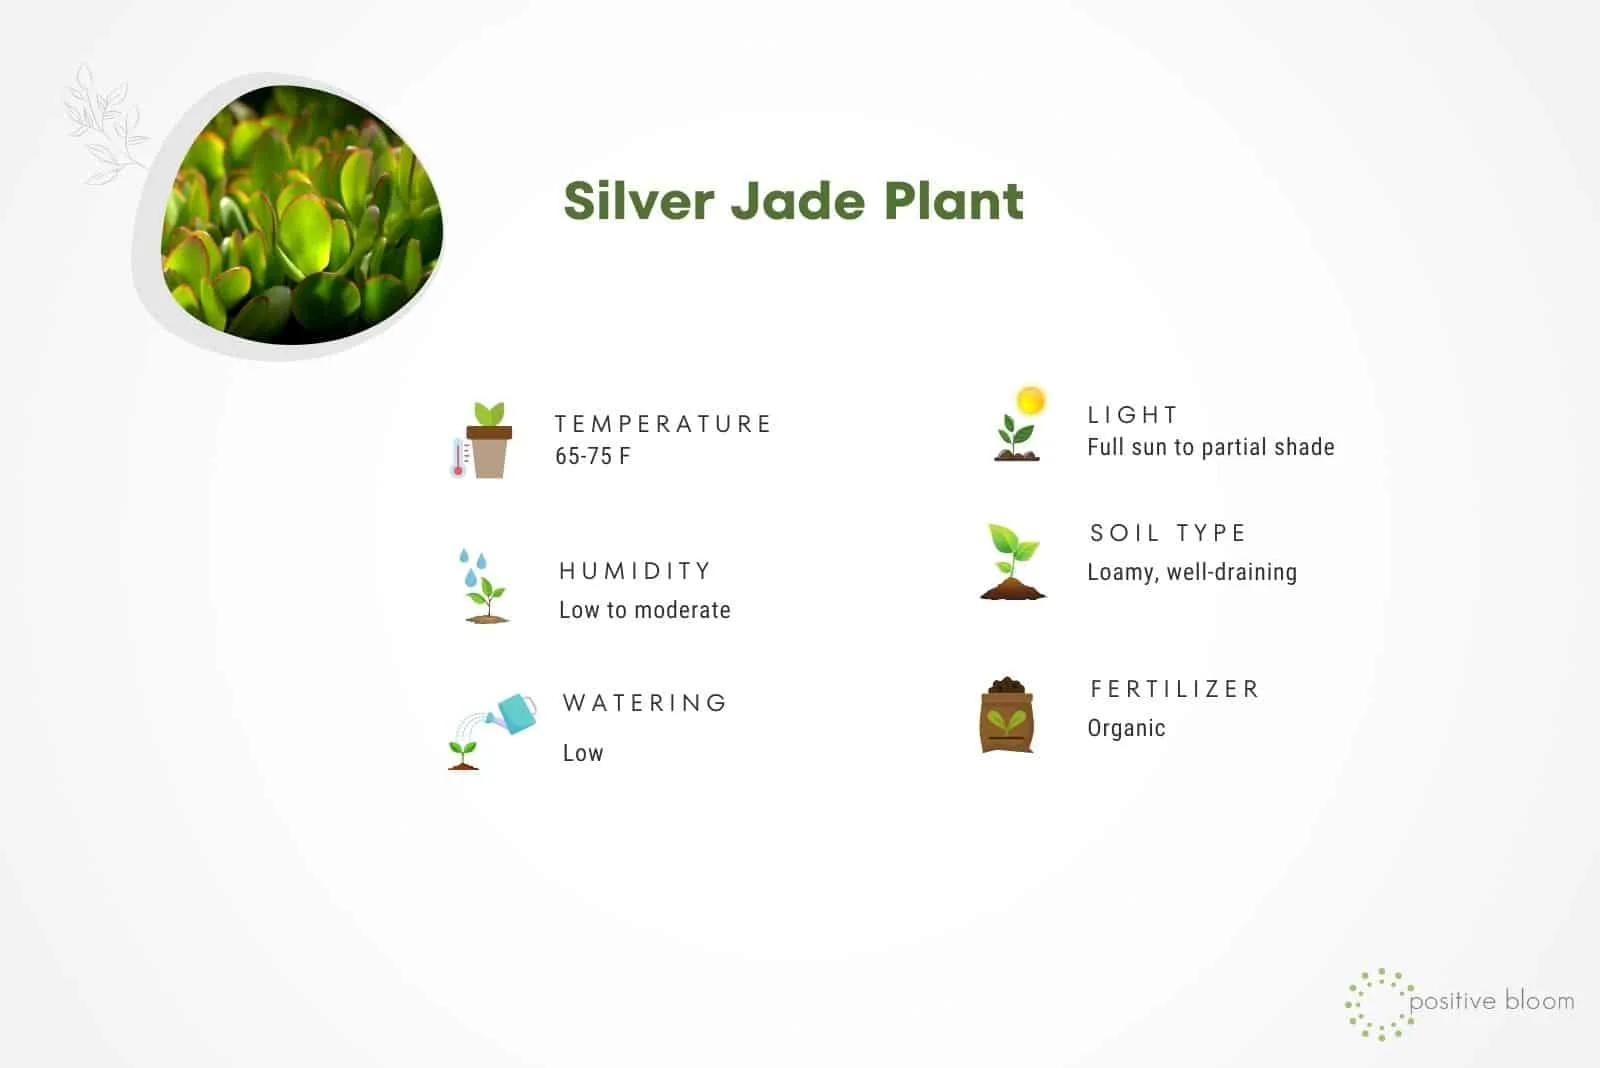 Silver Jade Plant care guide